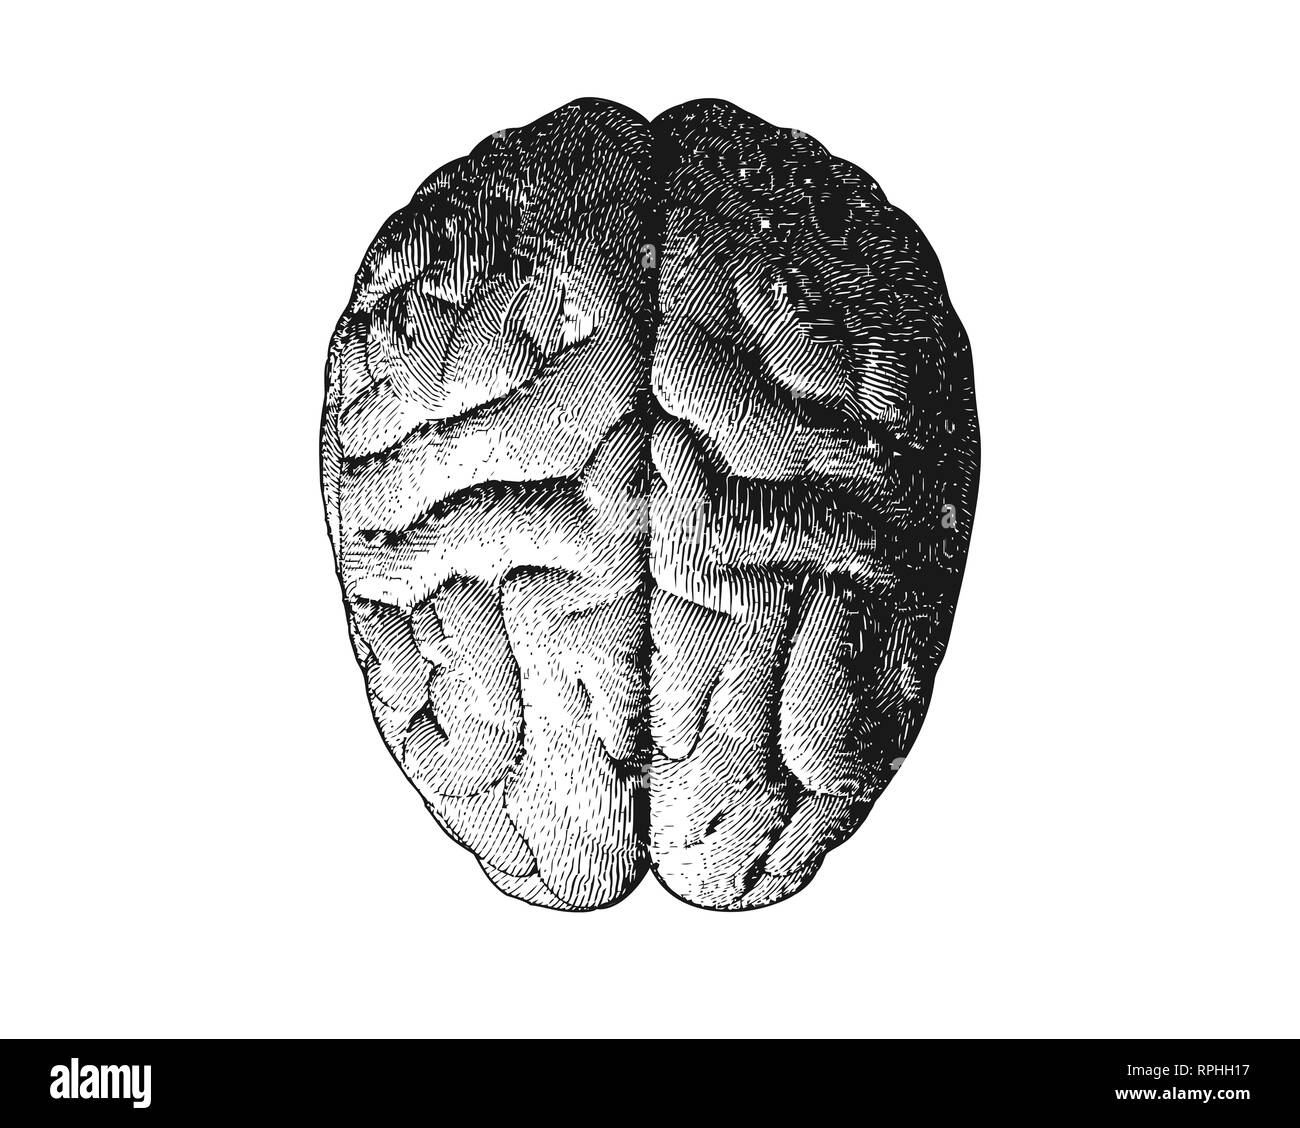 Monochrome engraving brain superior view illustration isolated on white background Stock Photo